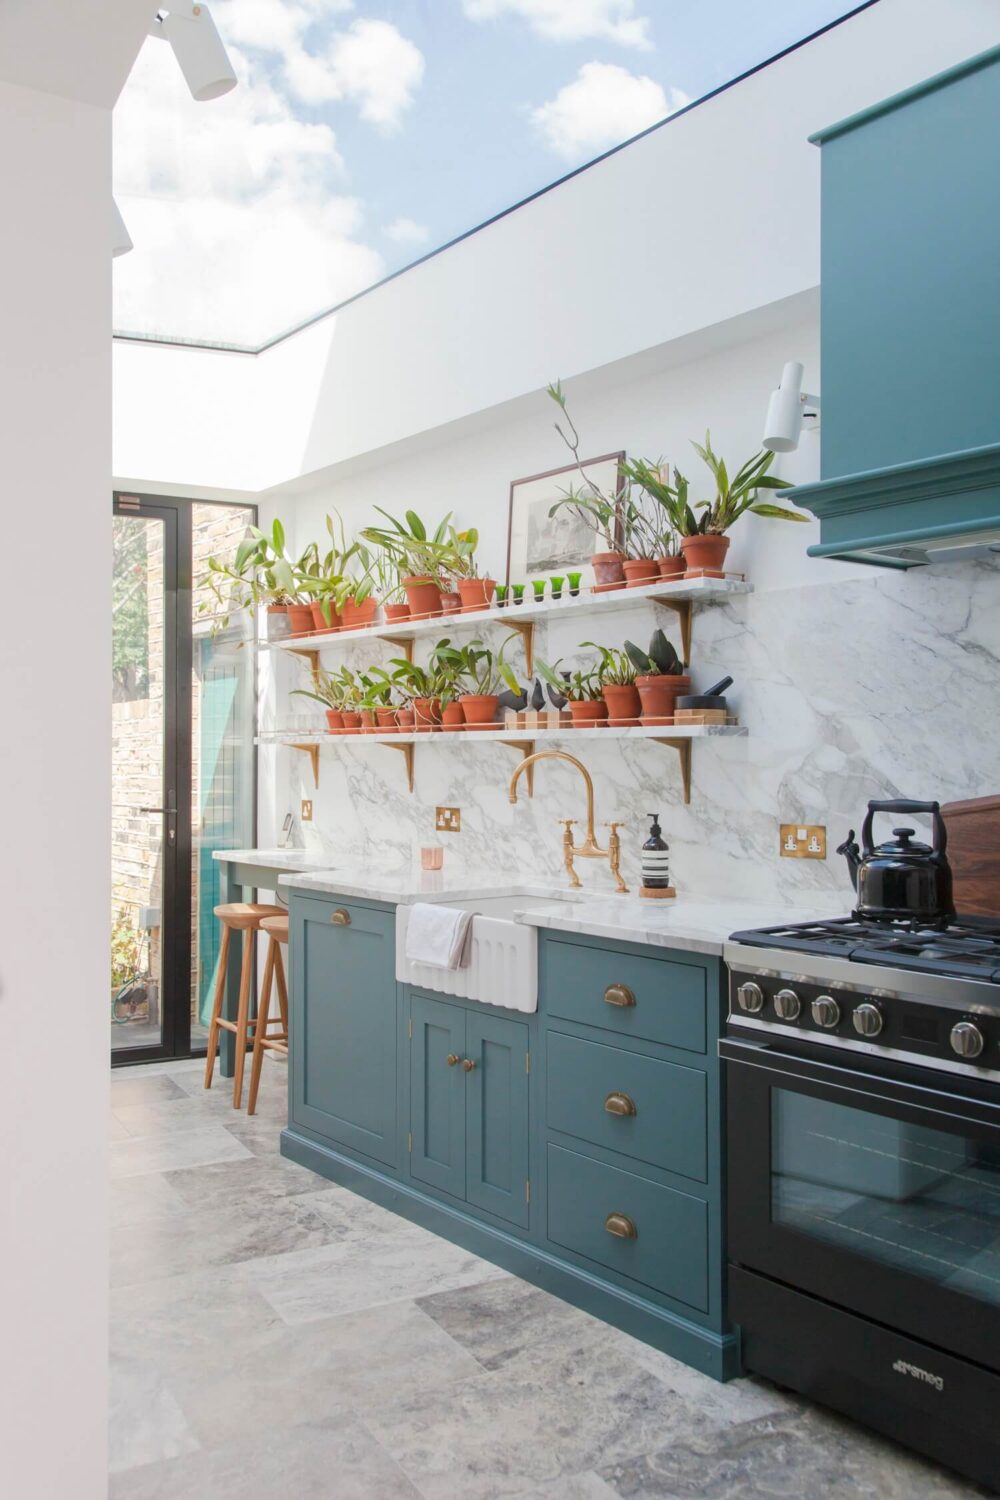 devol-kitchen-blue-cabinets-large-modern-roof-window-nordroom